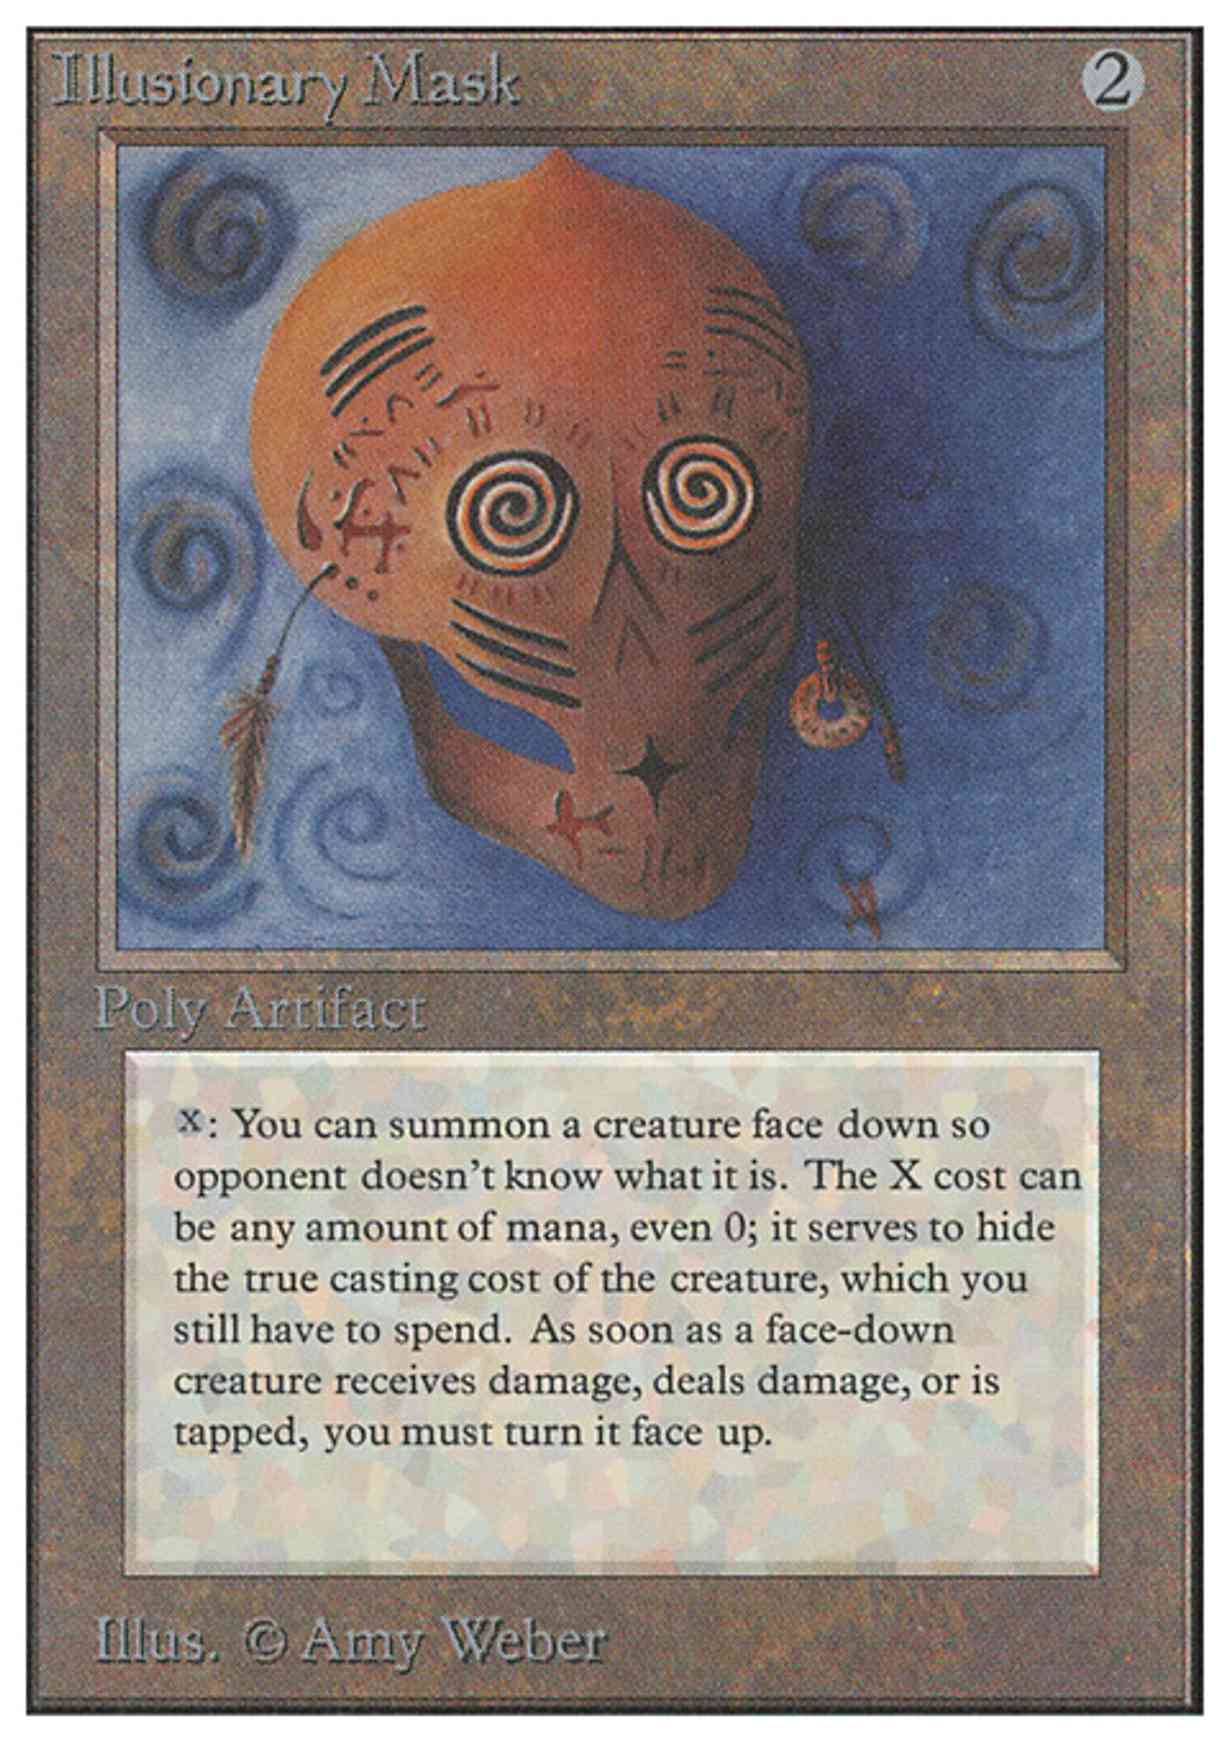 Illusionary Mask magic card front